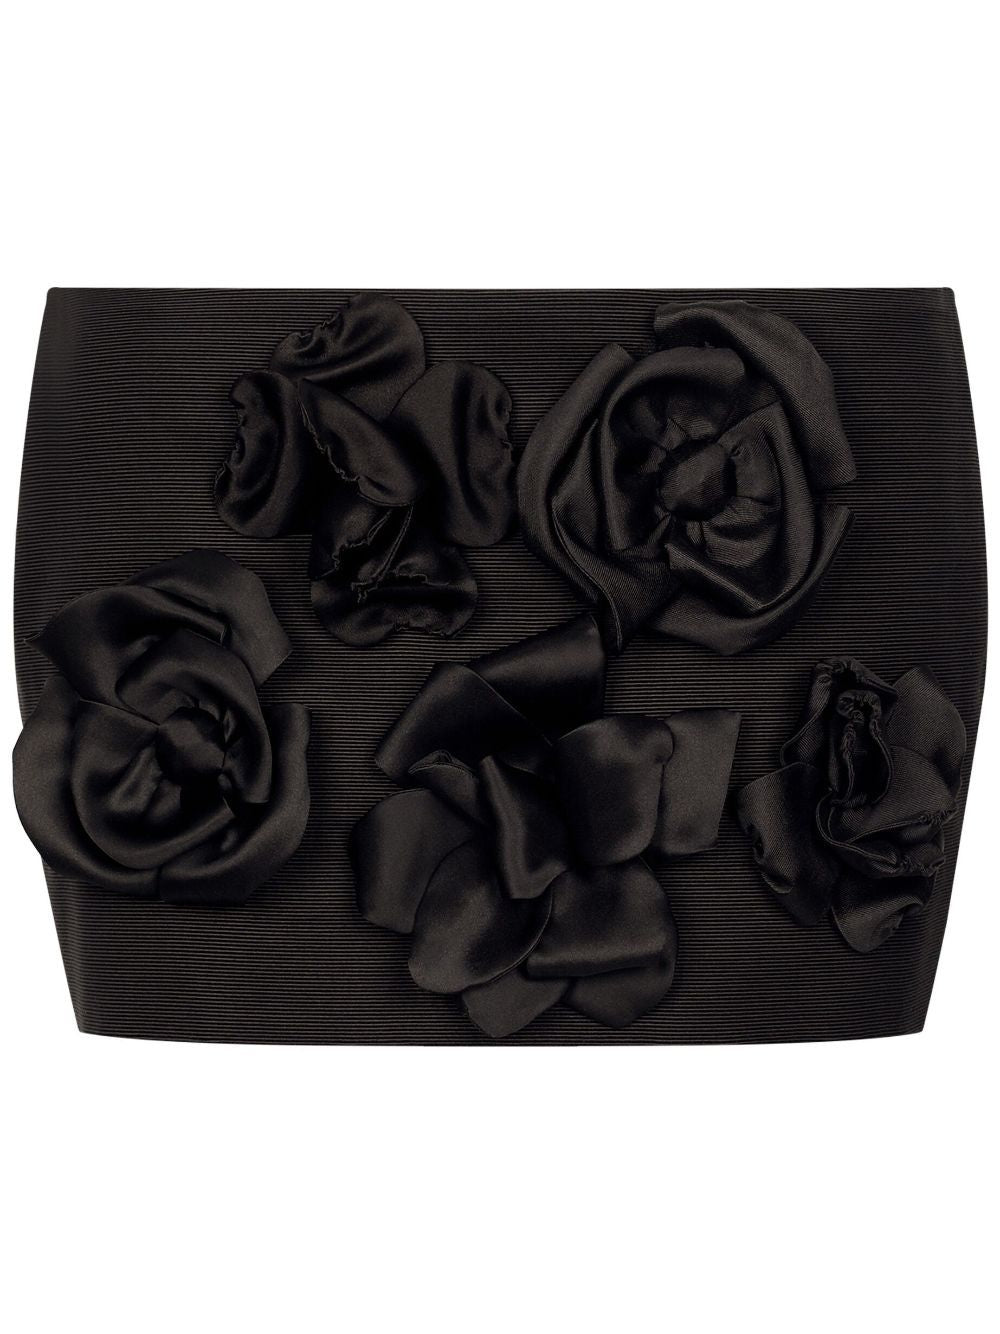 DOLCE & GABBANA Black Ottoman Miniskirt with Floral Appliqué for Women - FW23